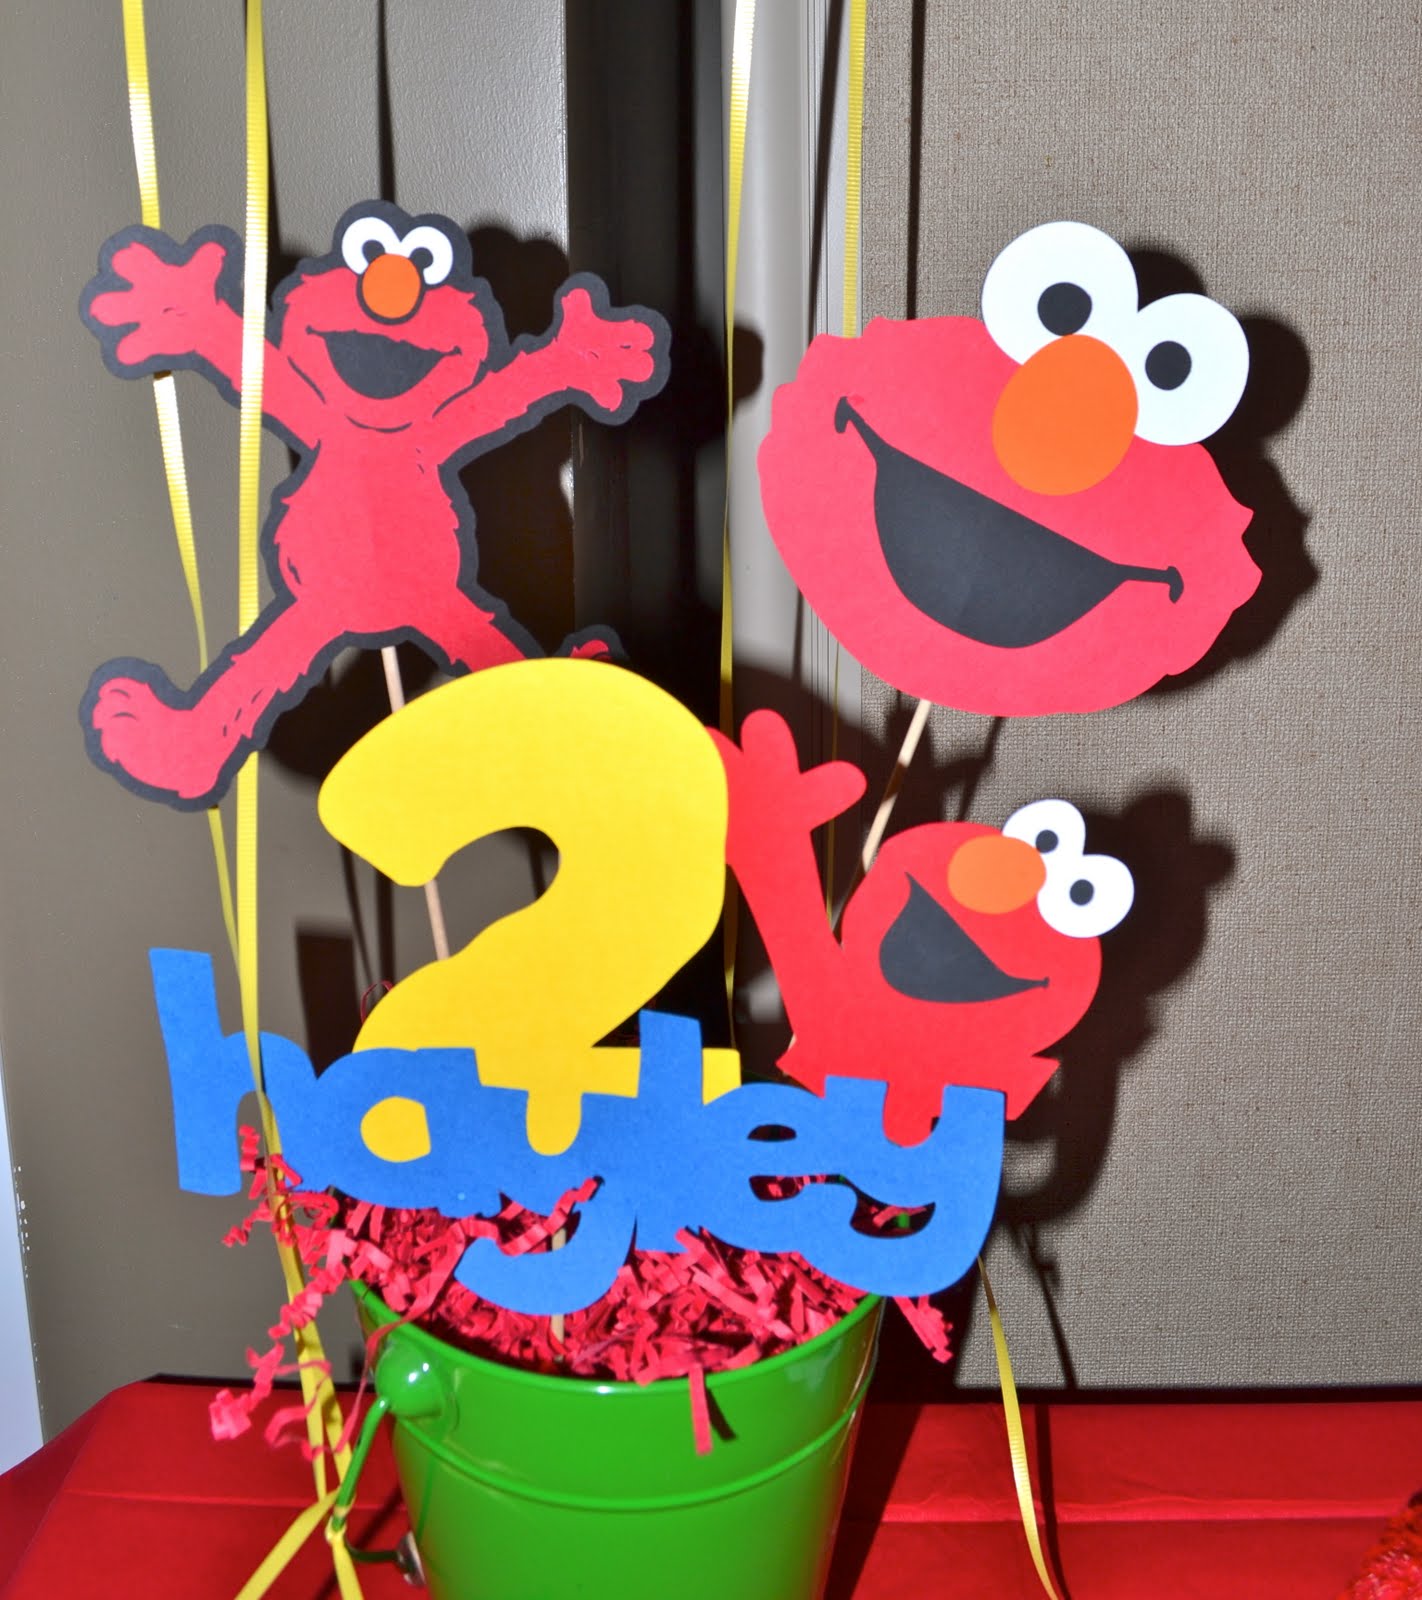 Buggy s Basement Elmo  Birthday  Party 